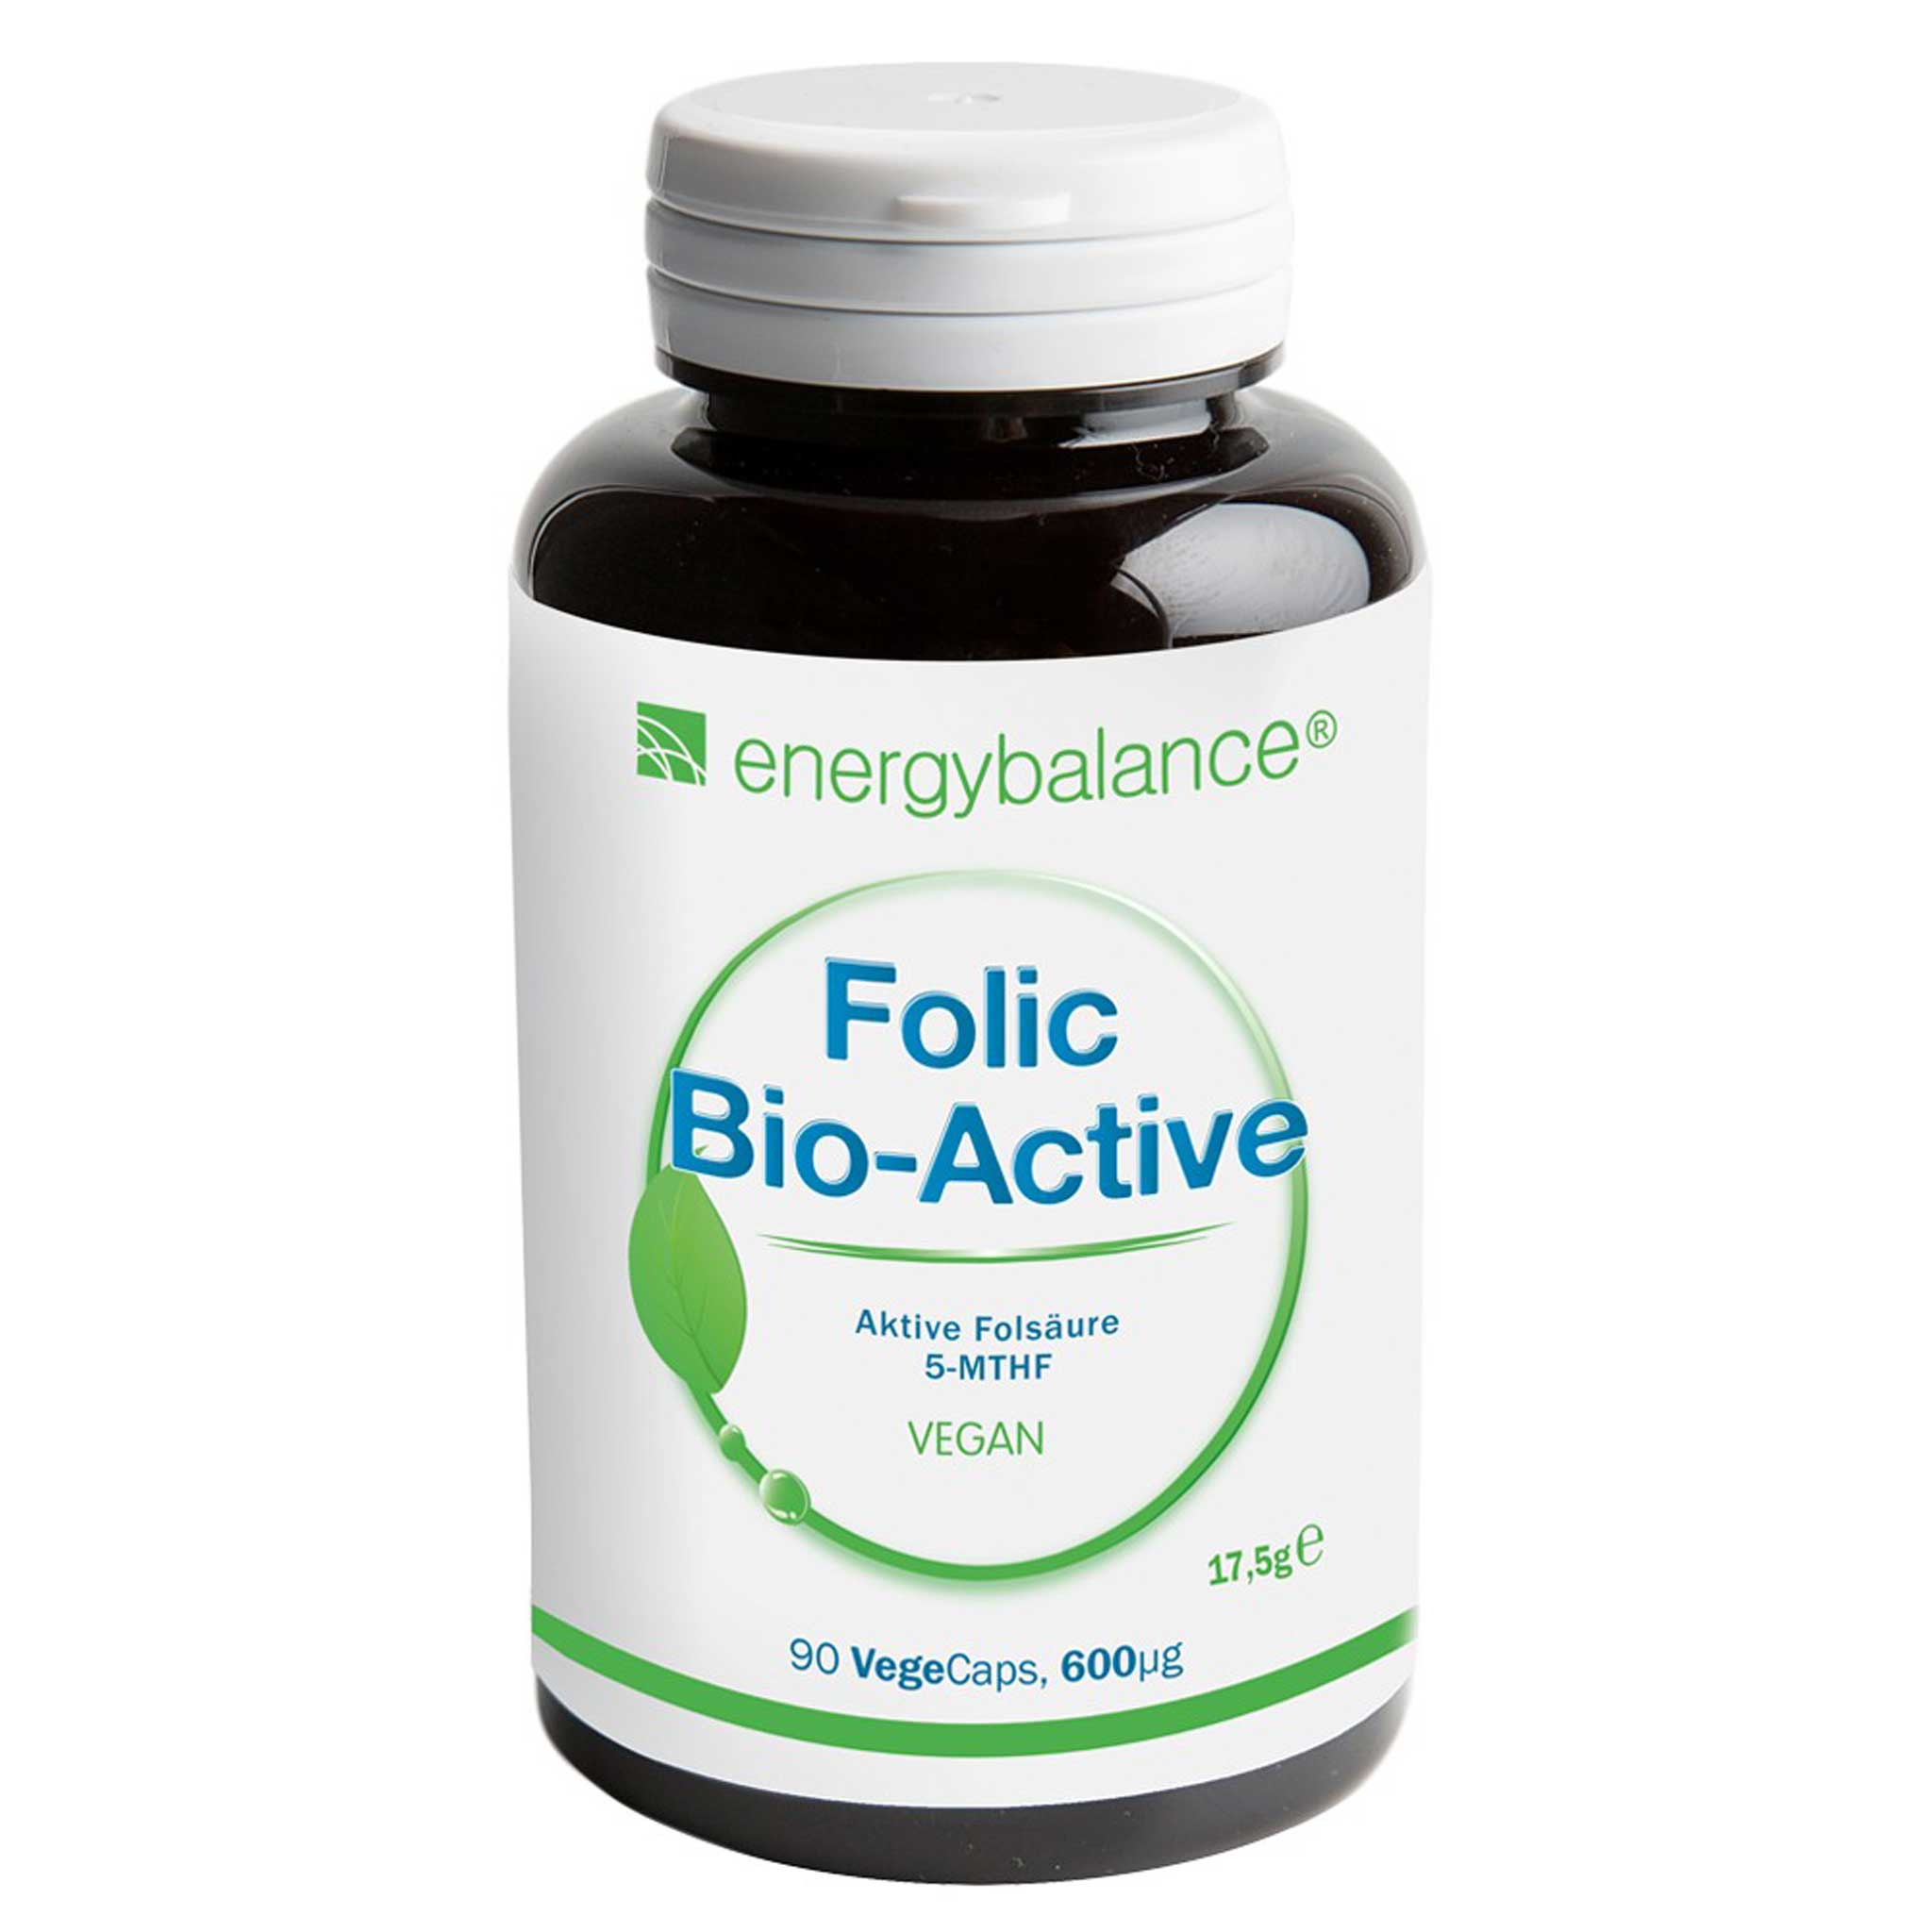 Folic Bio-Active 5-MTHF, 90 VegeCaps